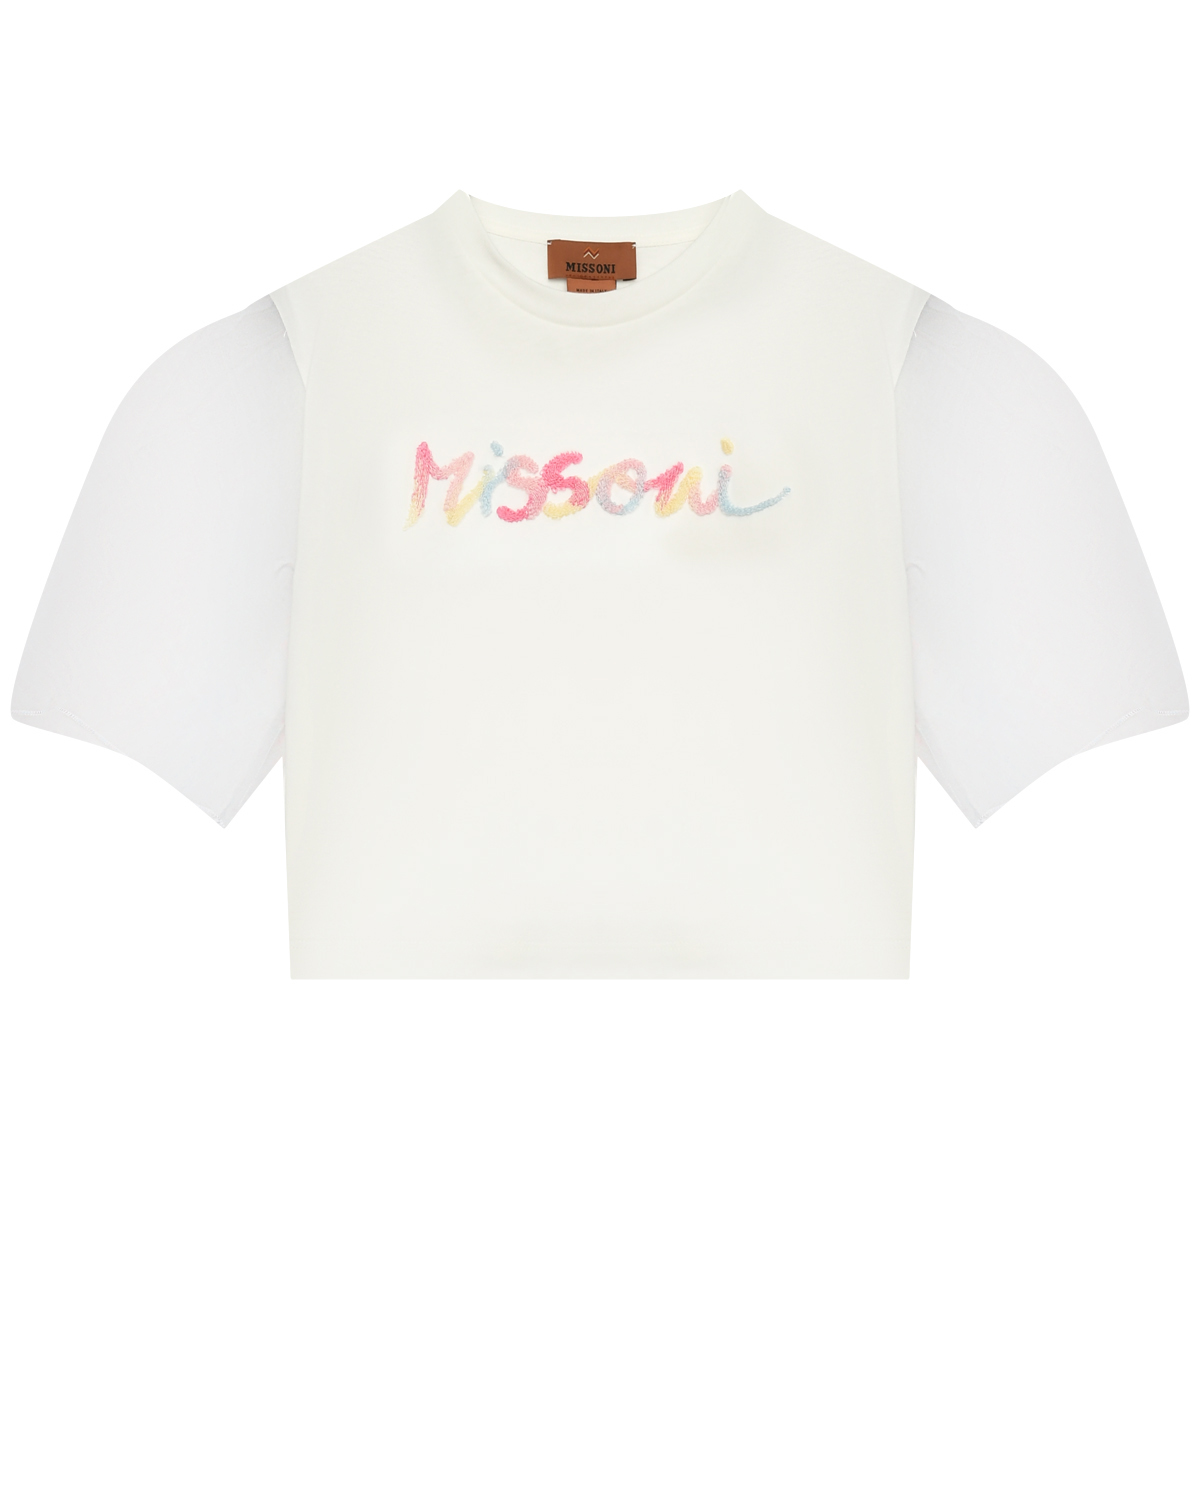 Футболка с разноцветным лого, белая Missoni футболка со сплошным разноцветным лого dolce